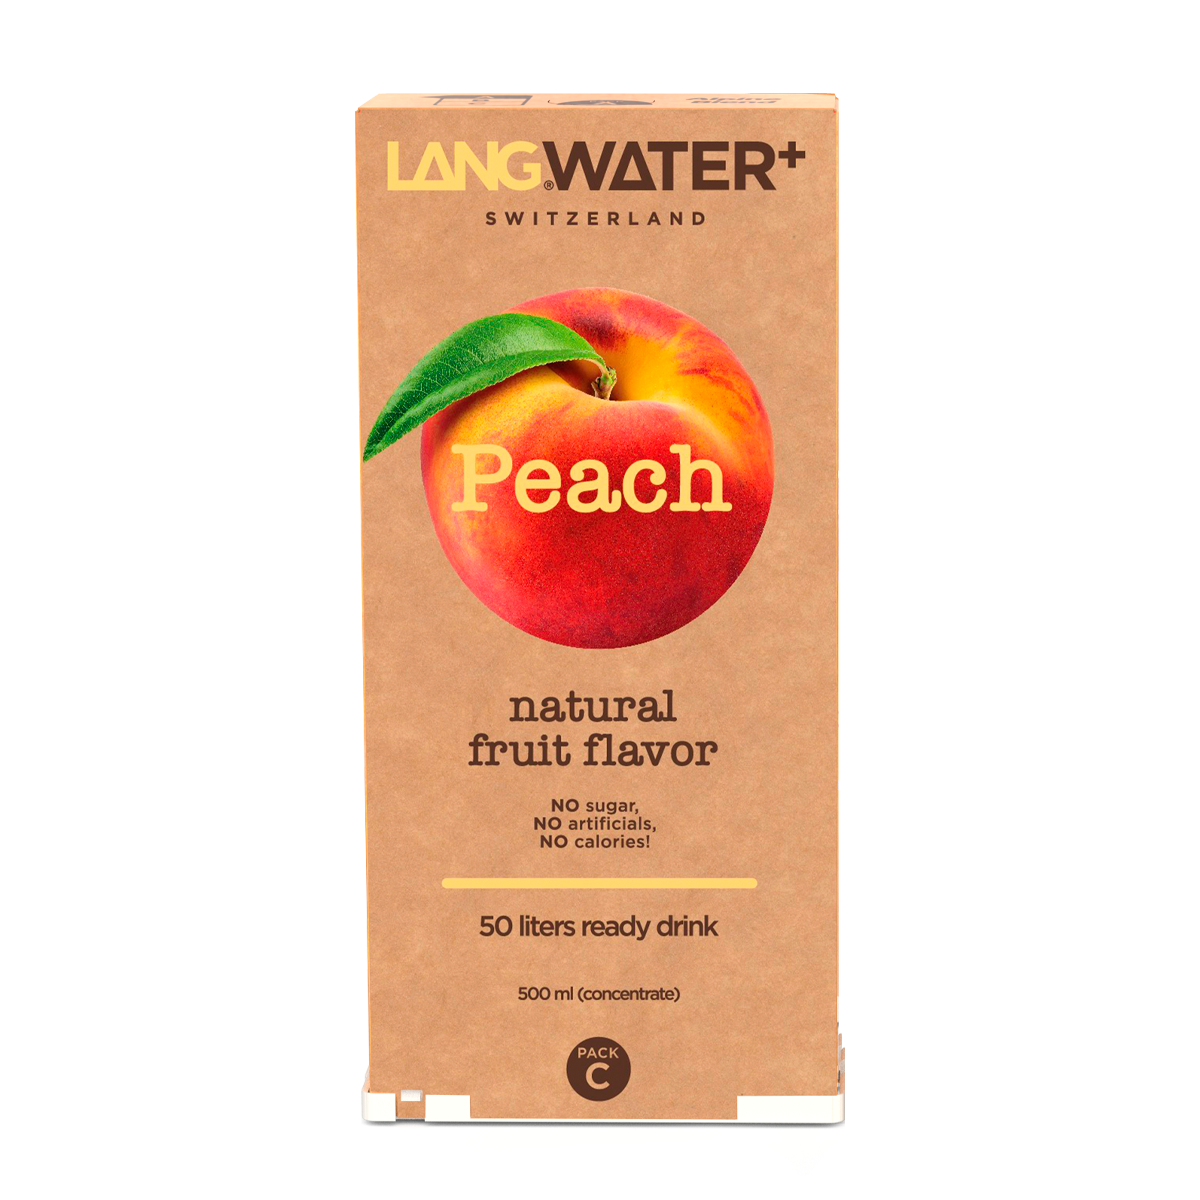 Peach fruit extract